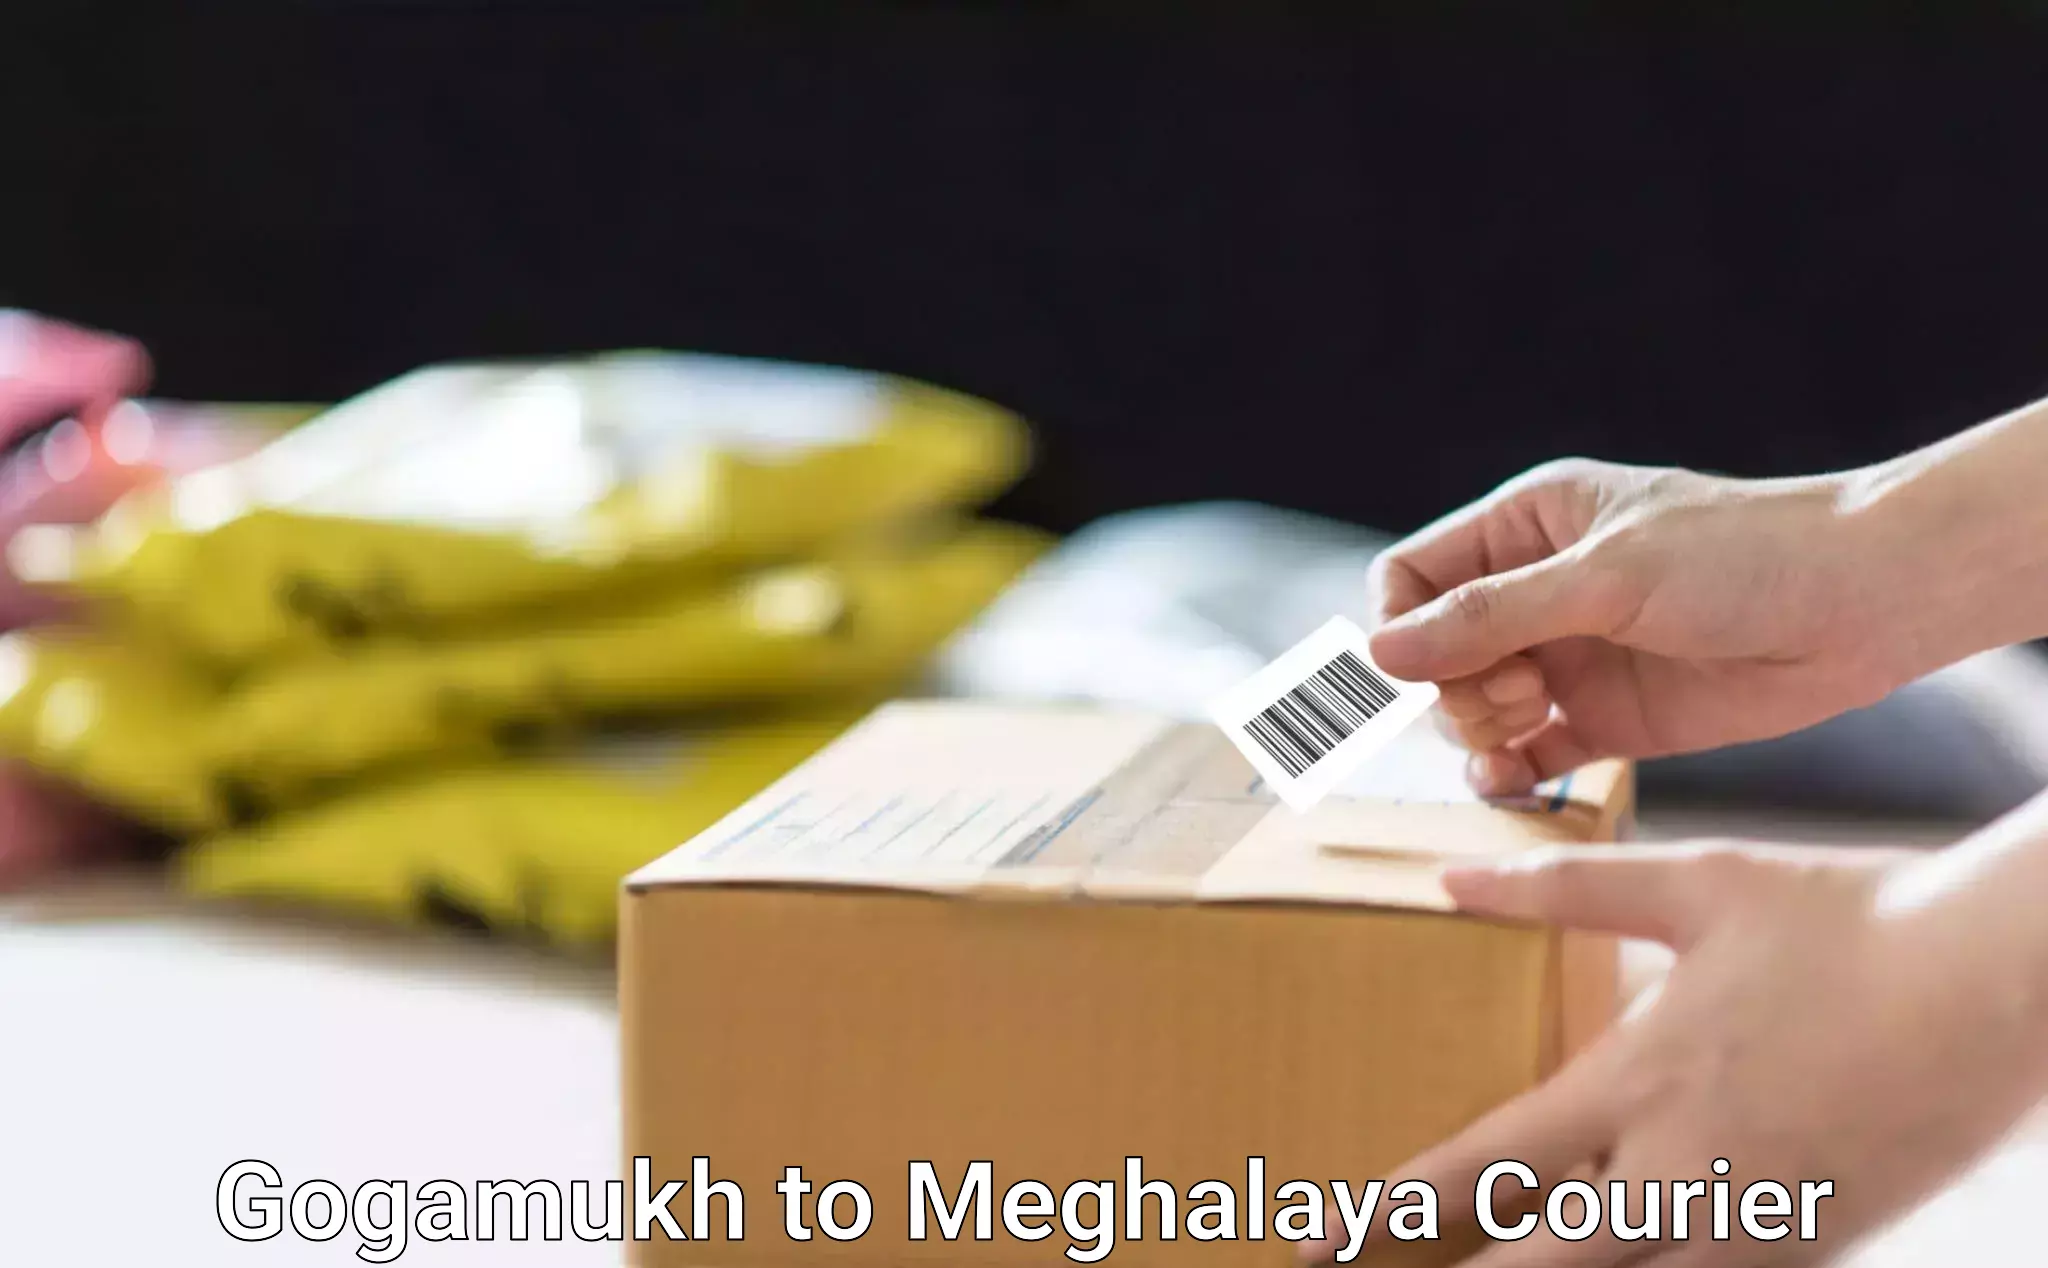 Global logistics network Gogamukh to Meghalaya